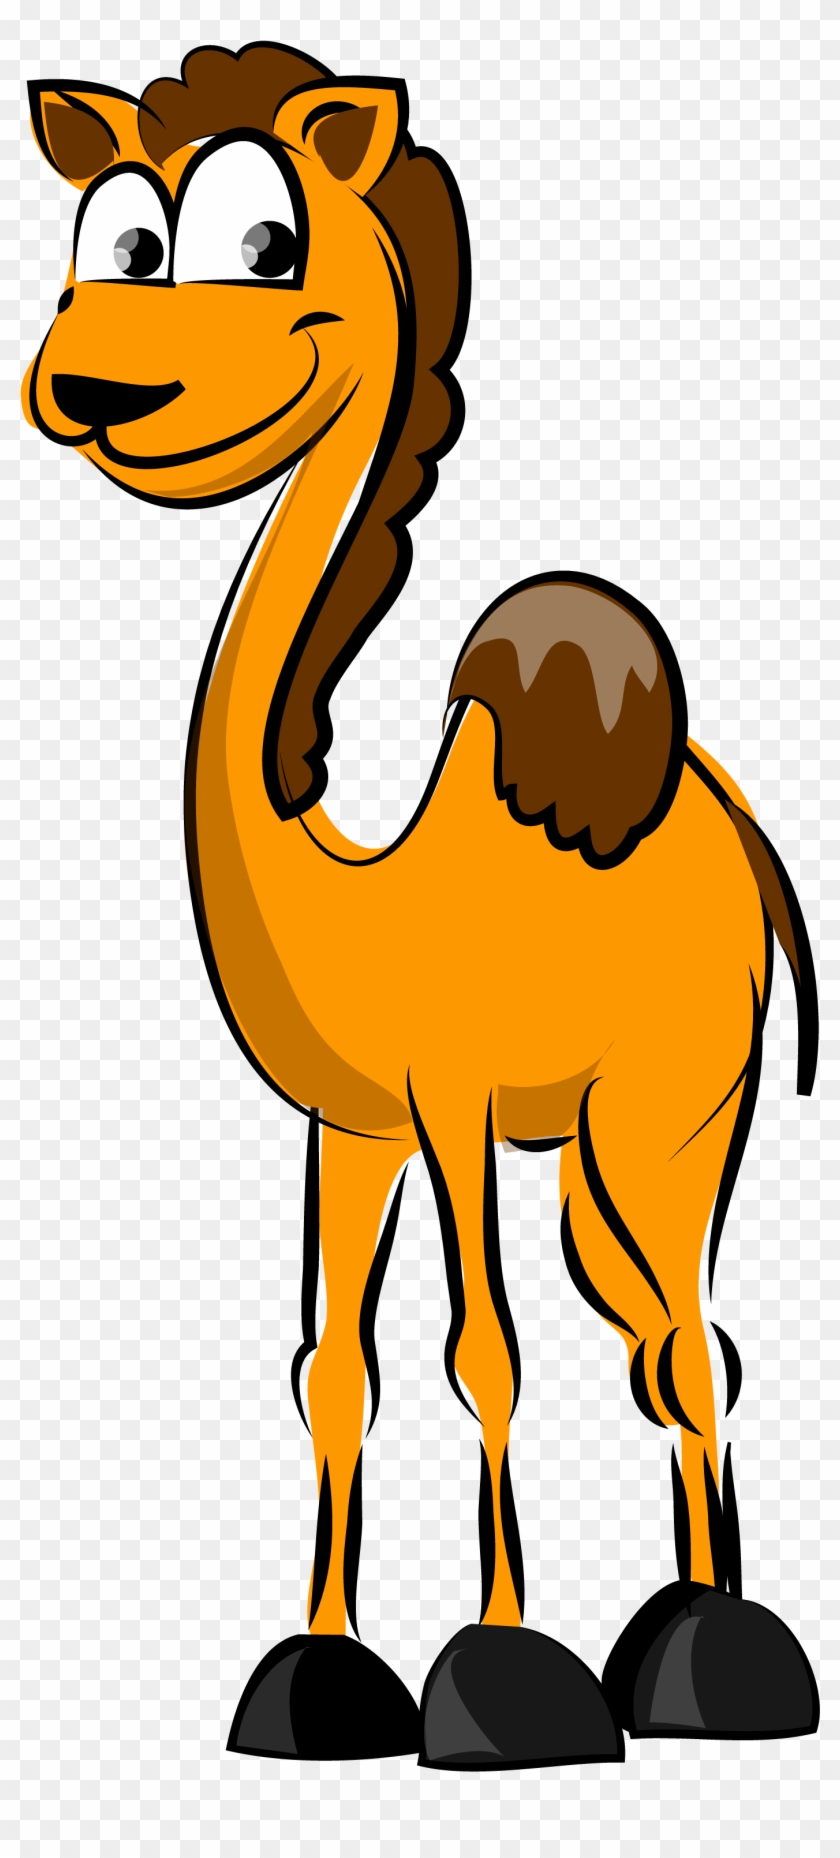 Camel Cartoon Hand-painted Big Eyes Vector - Illustration #307996